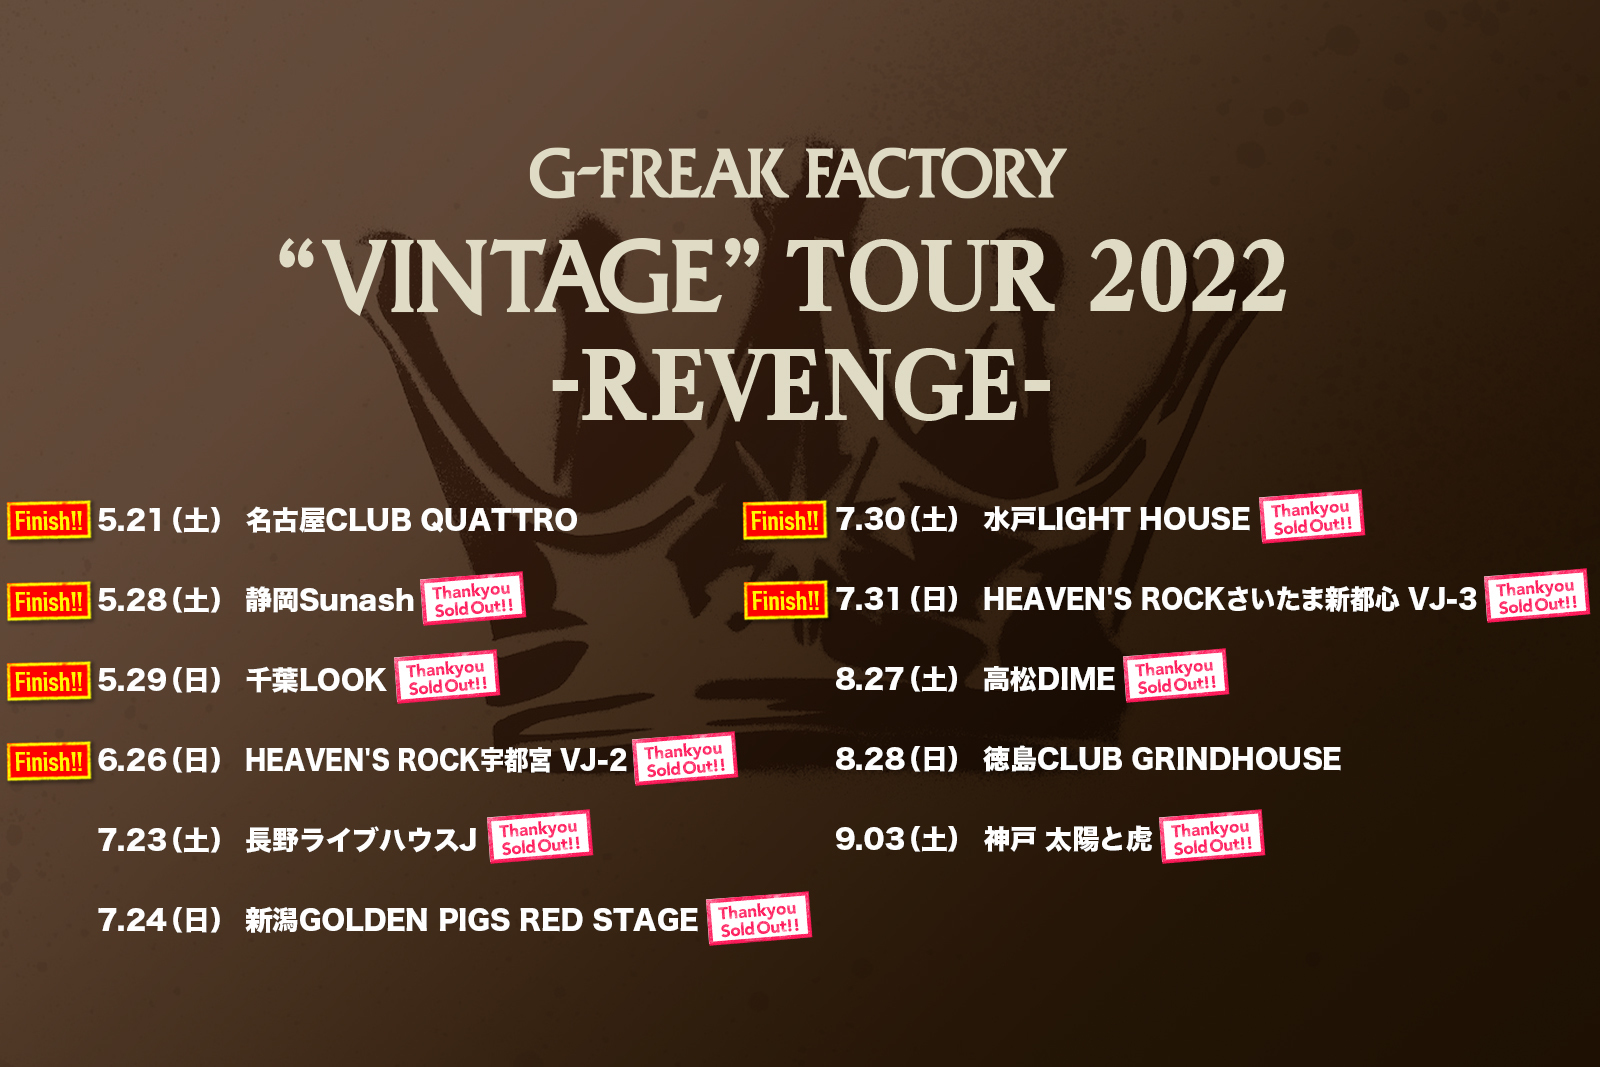 G-FREAK FACTORY “VINTAGE” TOUR 2022-REVENGE-